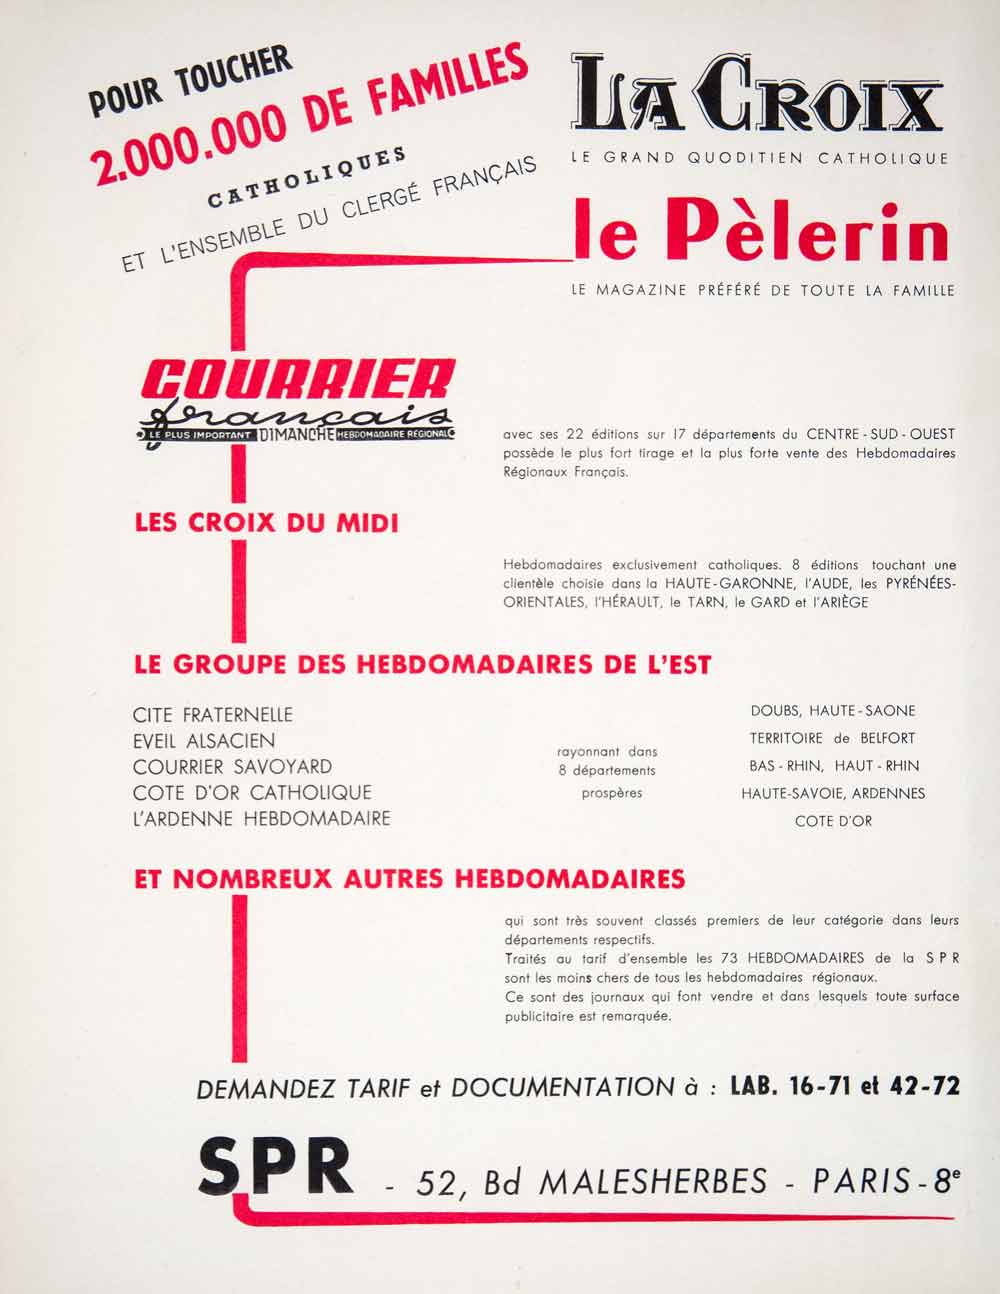 1956 Lithograph Ad Pelerin 17 Jean-Goujon Paris La Croix Catholic VEN7